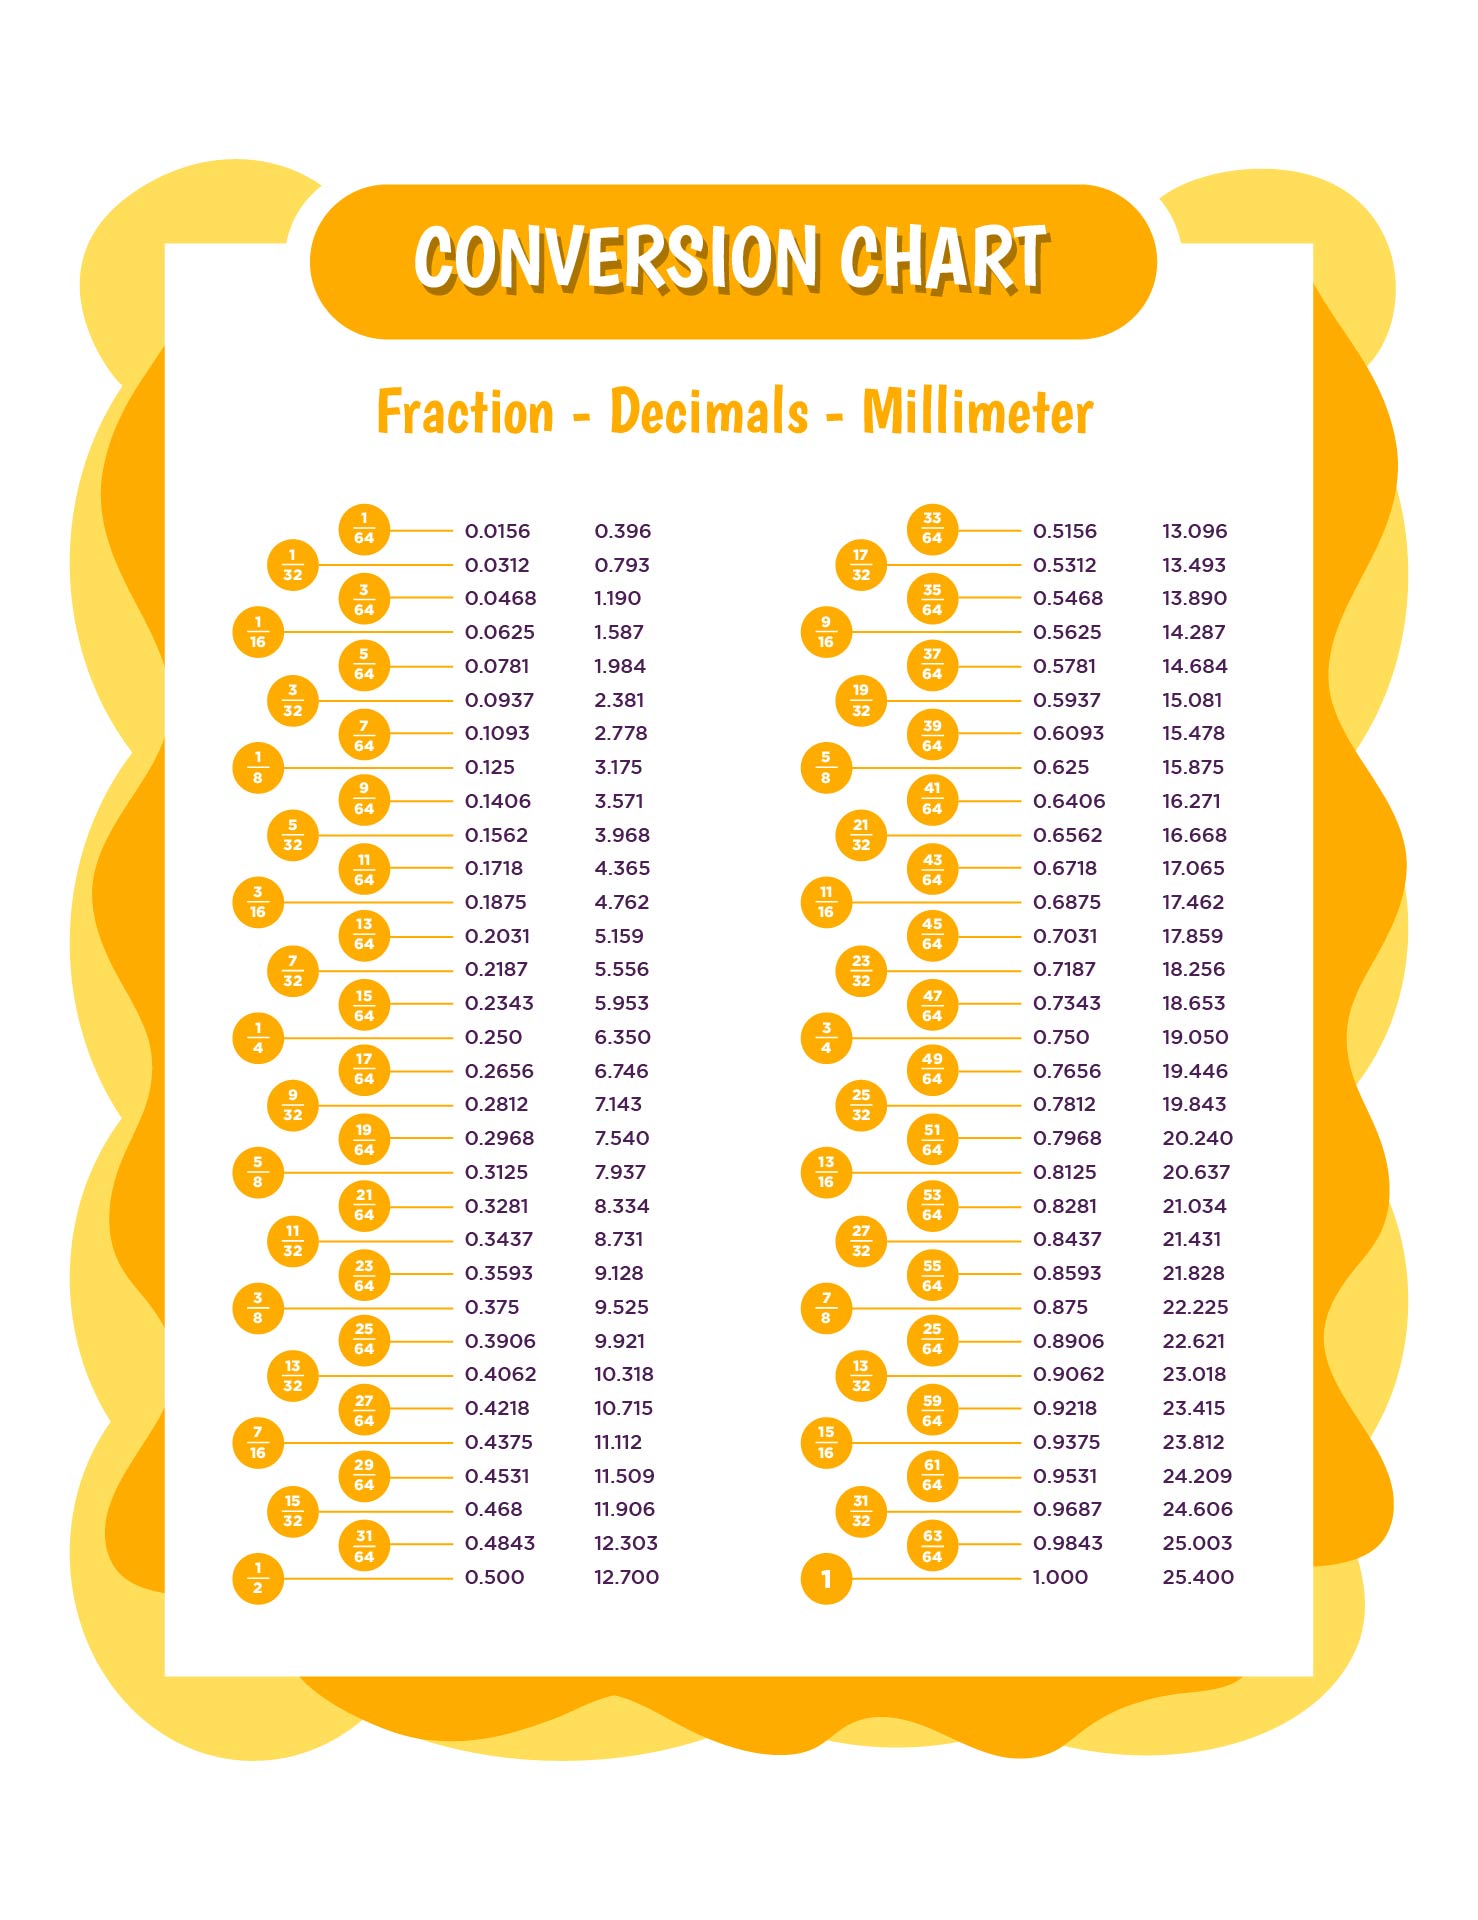 Printable Fraction Decimal Conversion Chart